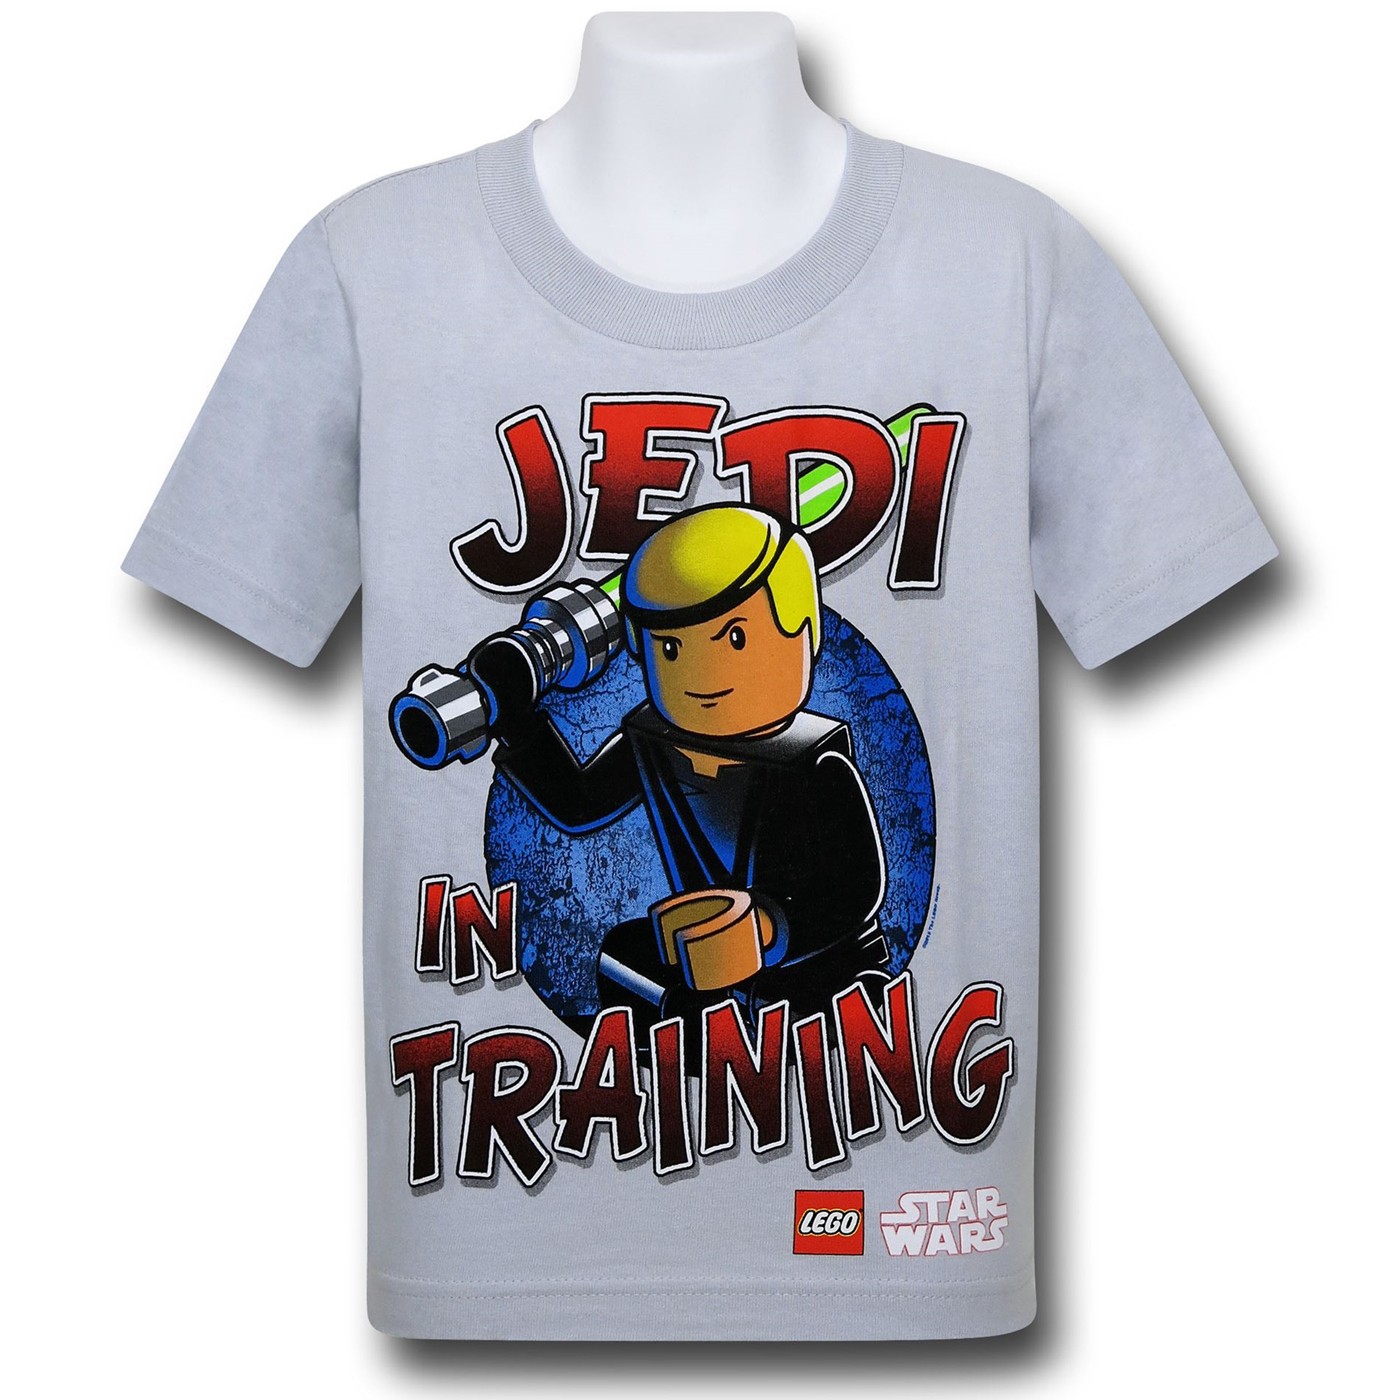 Star Wars Lego Jedi In Training Kids T-Shirt